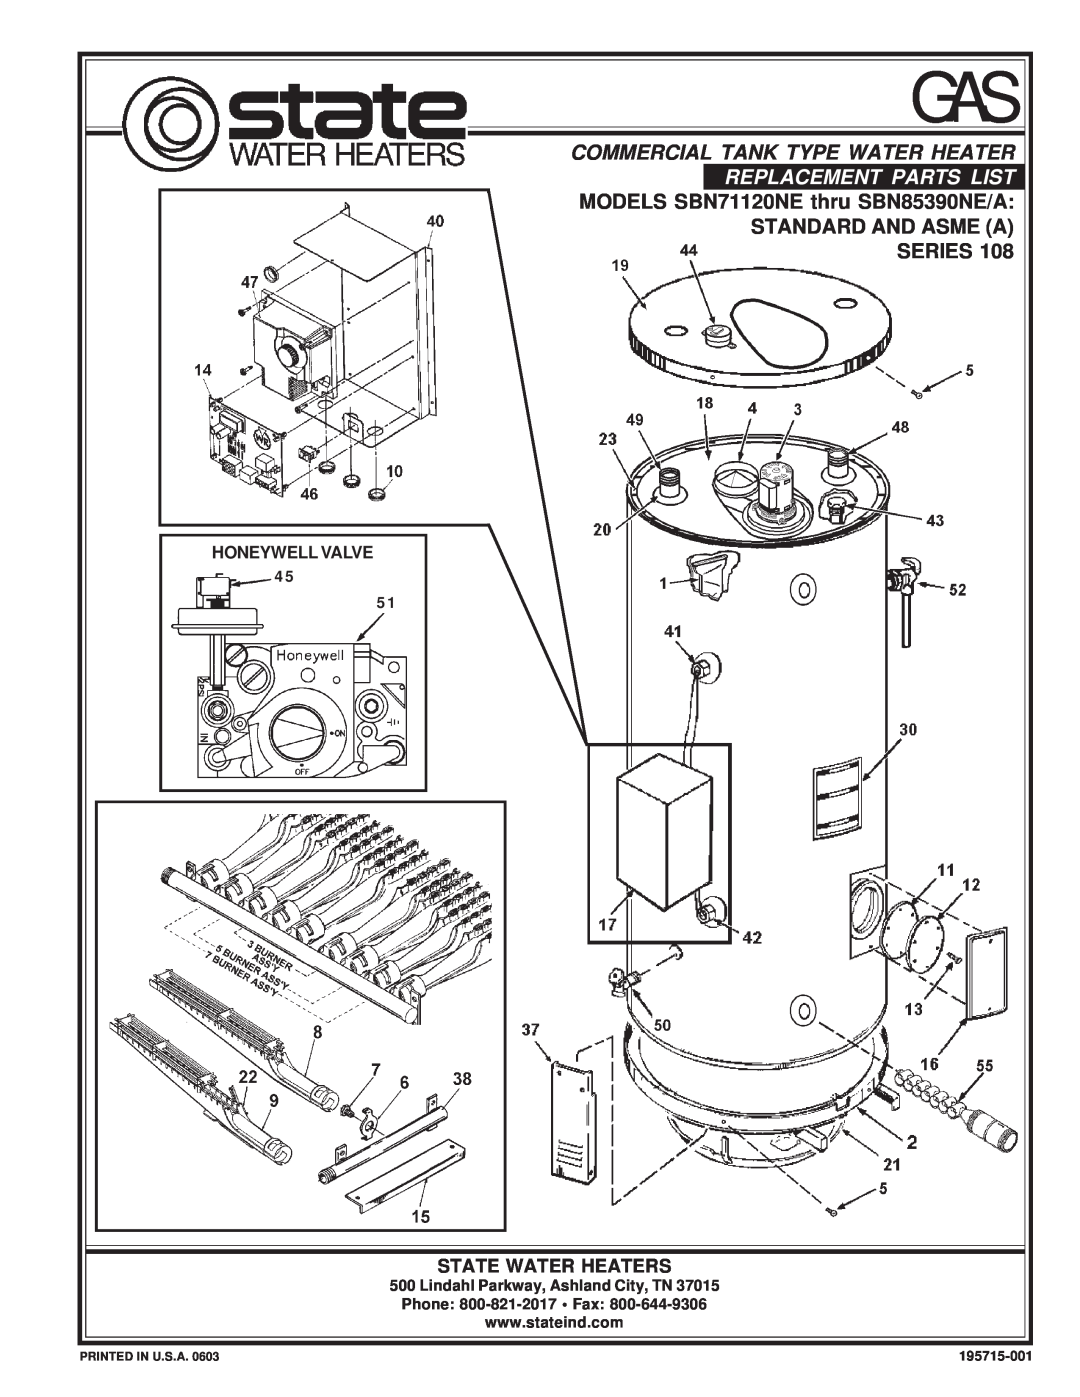 State Industries manual Commercial Tank Type Water Heater, MODELS SBN71120NE thru SBN85390NE/A, Standard And Asme A 